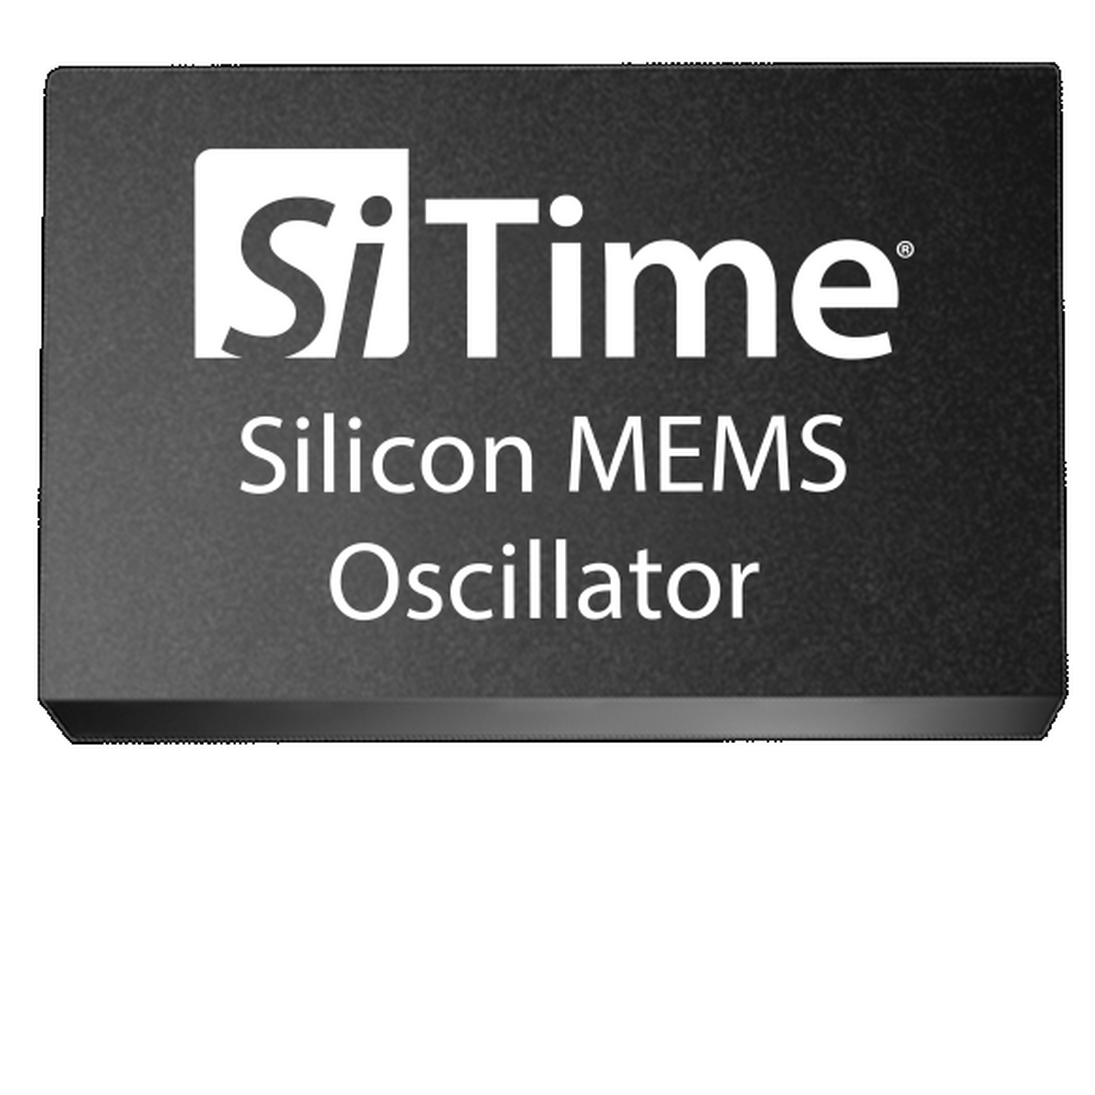 Sitime MEMS Oscillators